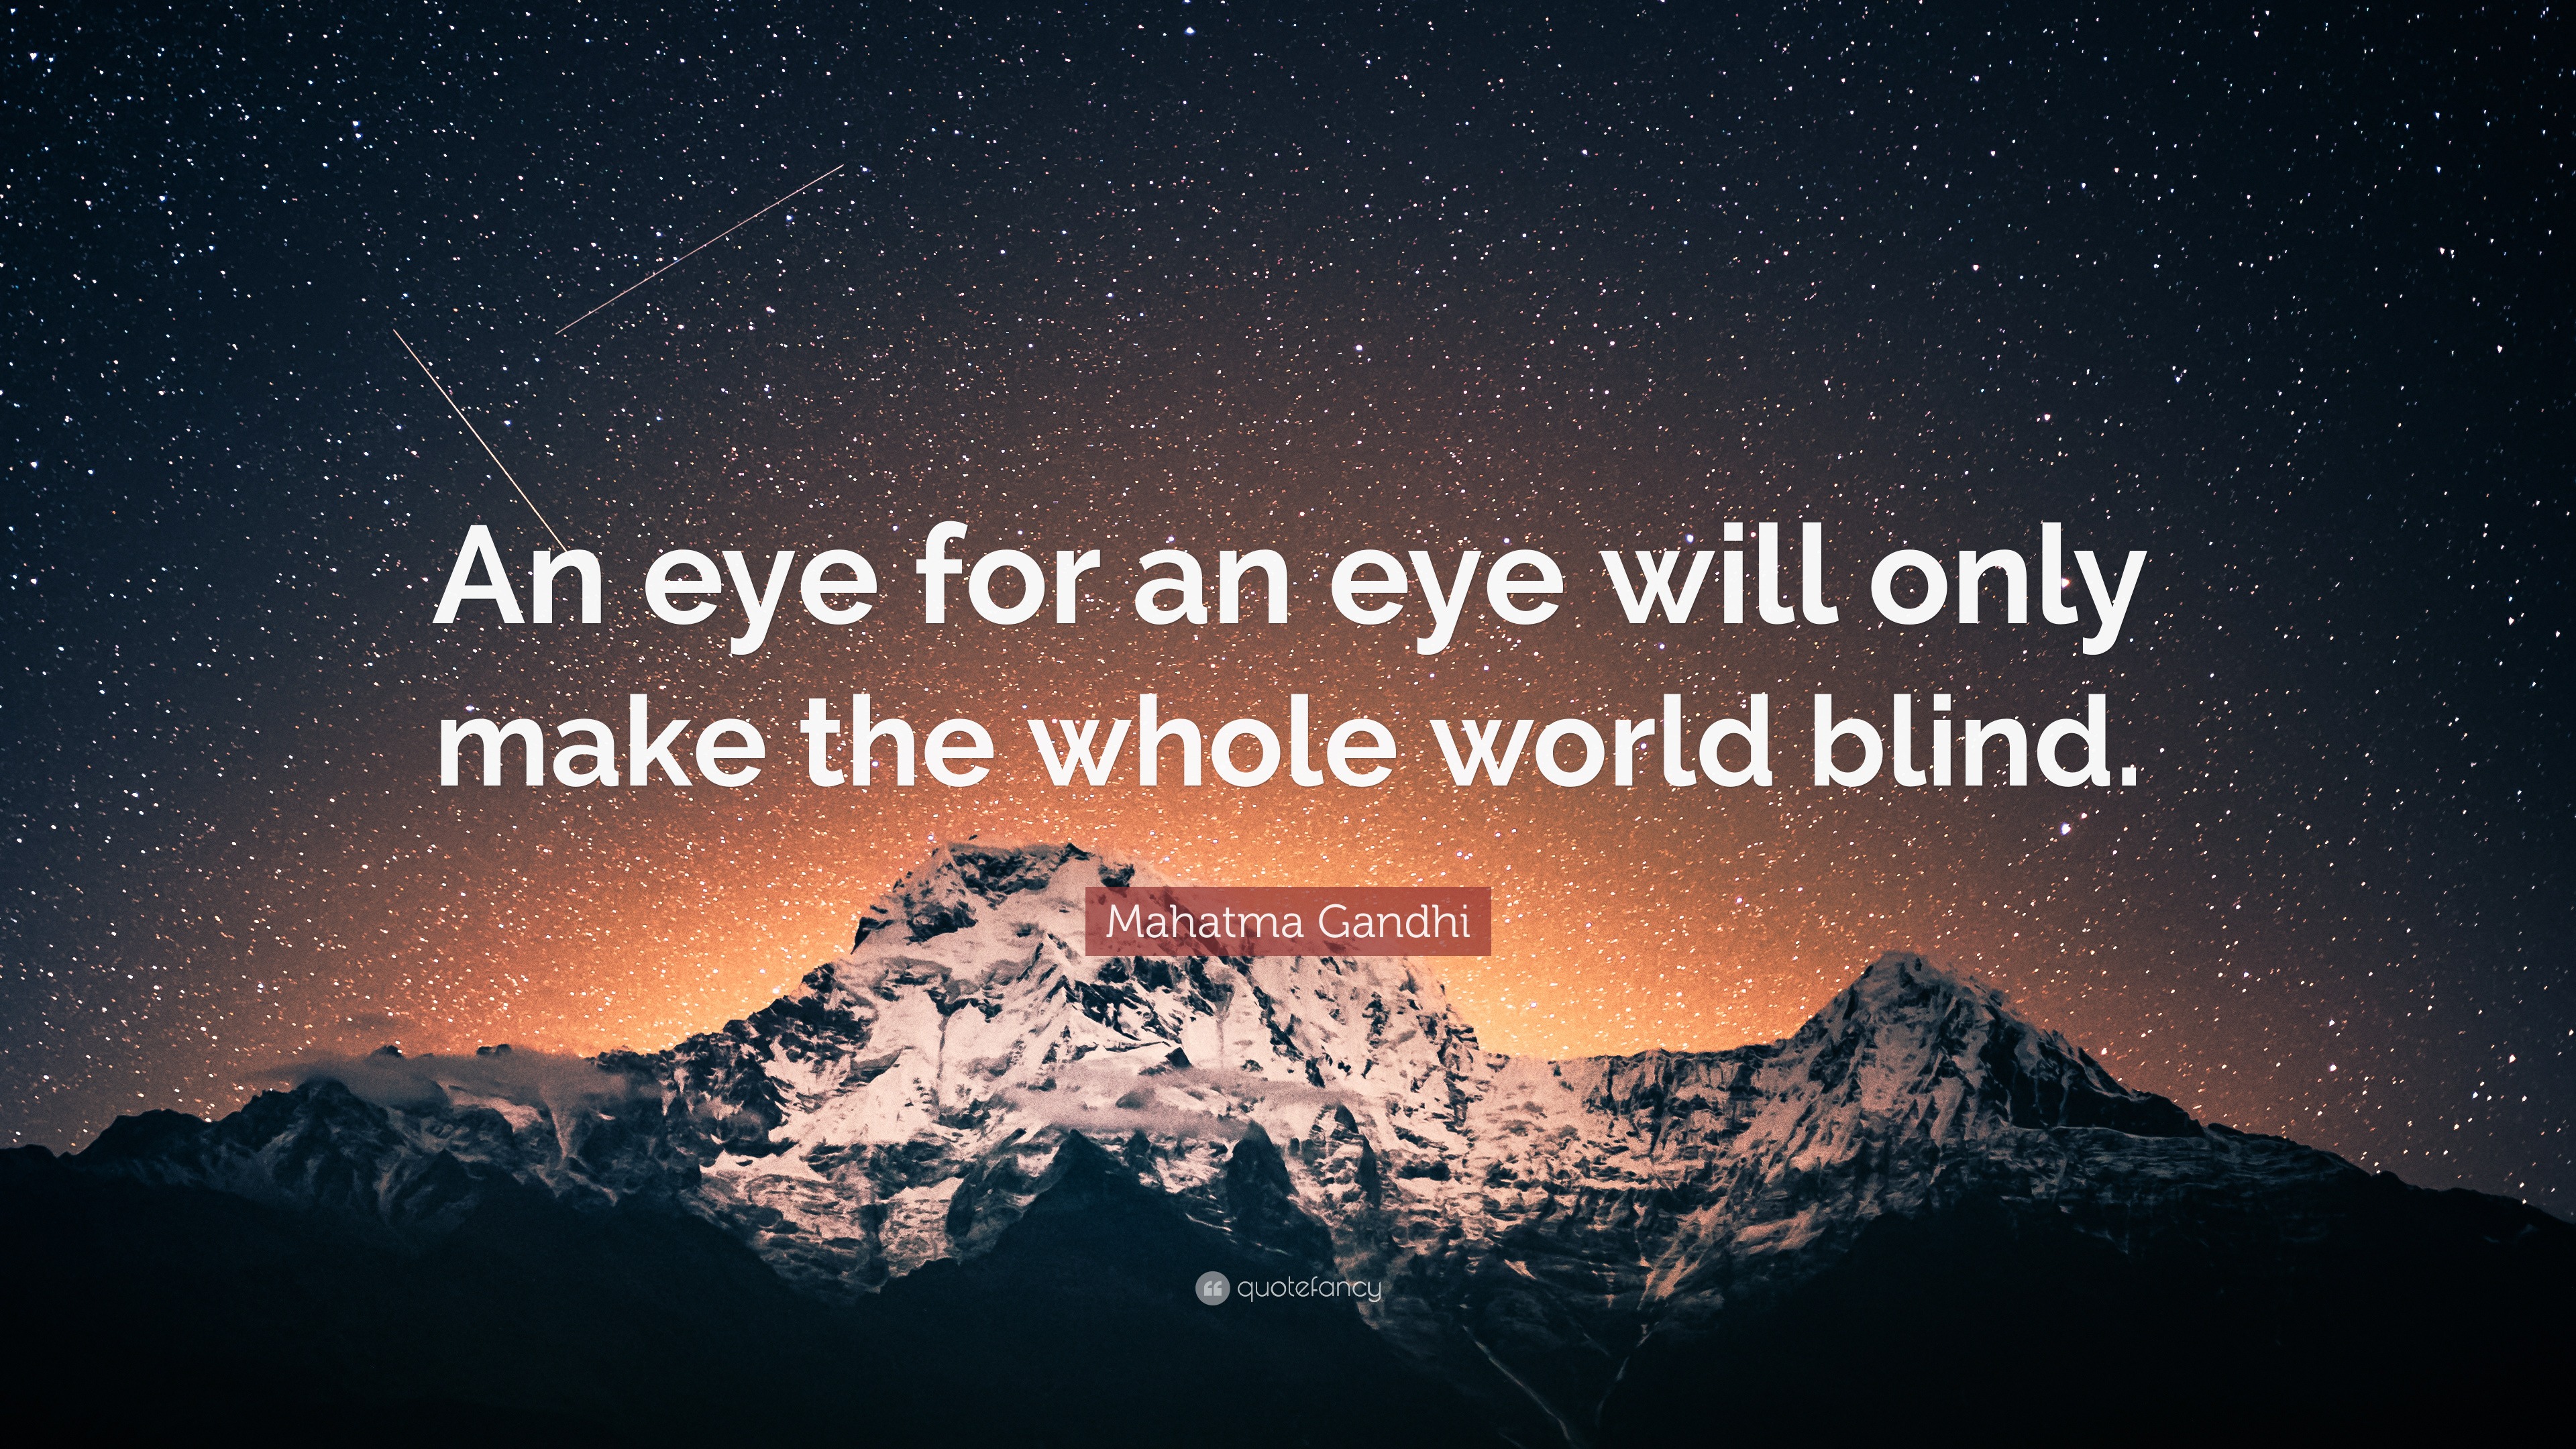 an eye for an eye makes the whole world blind